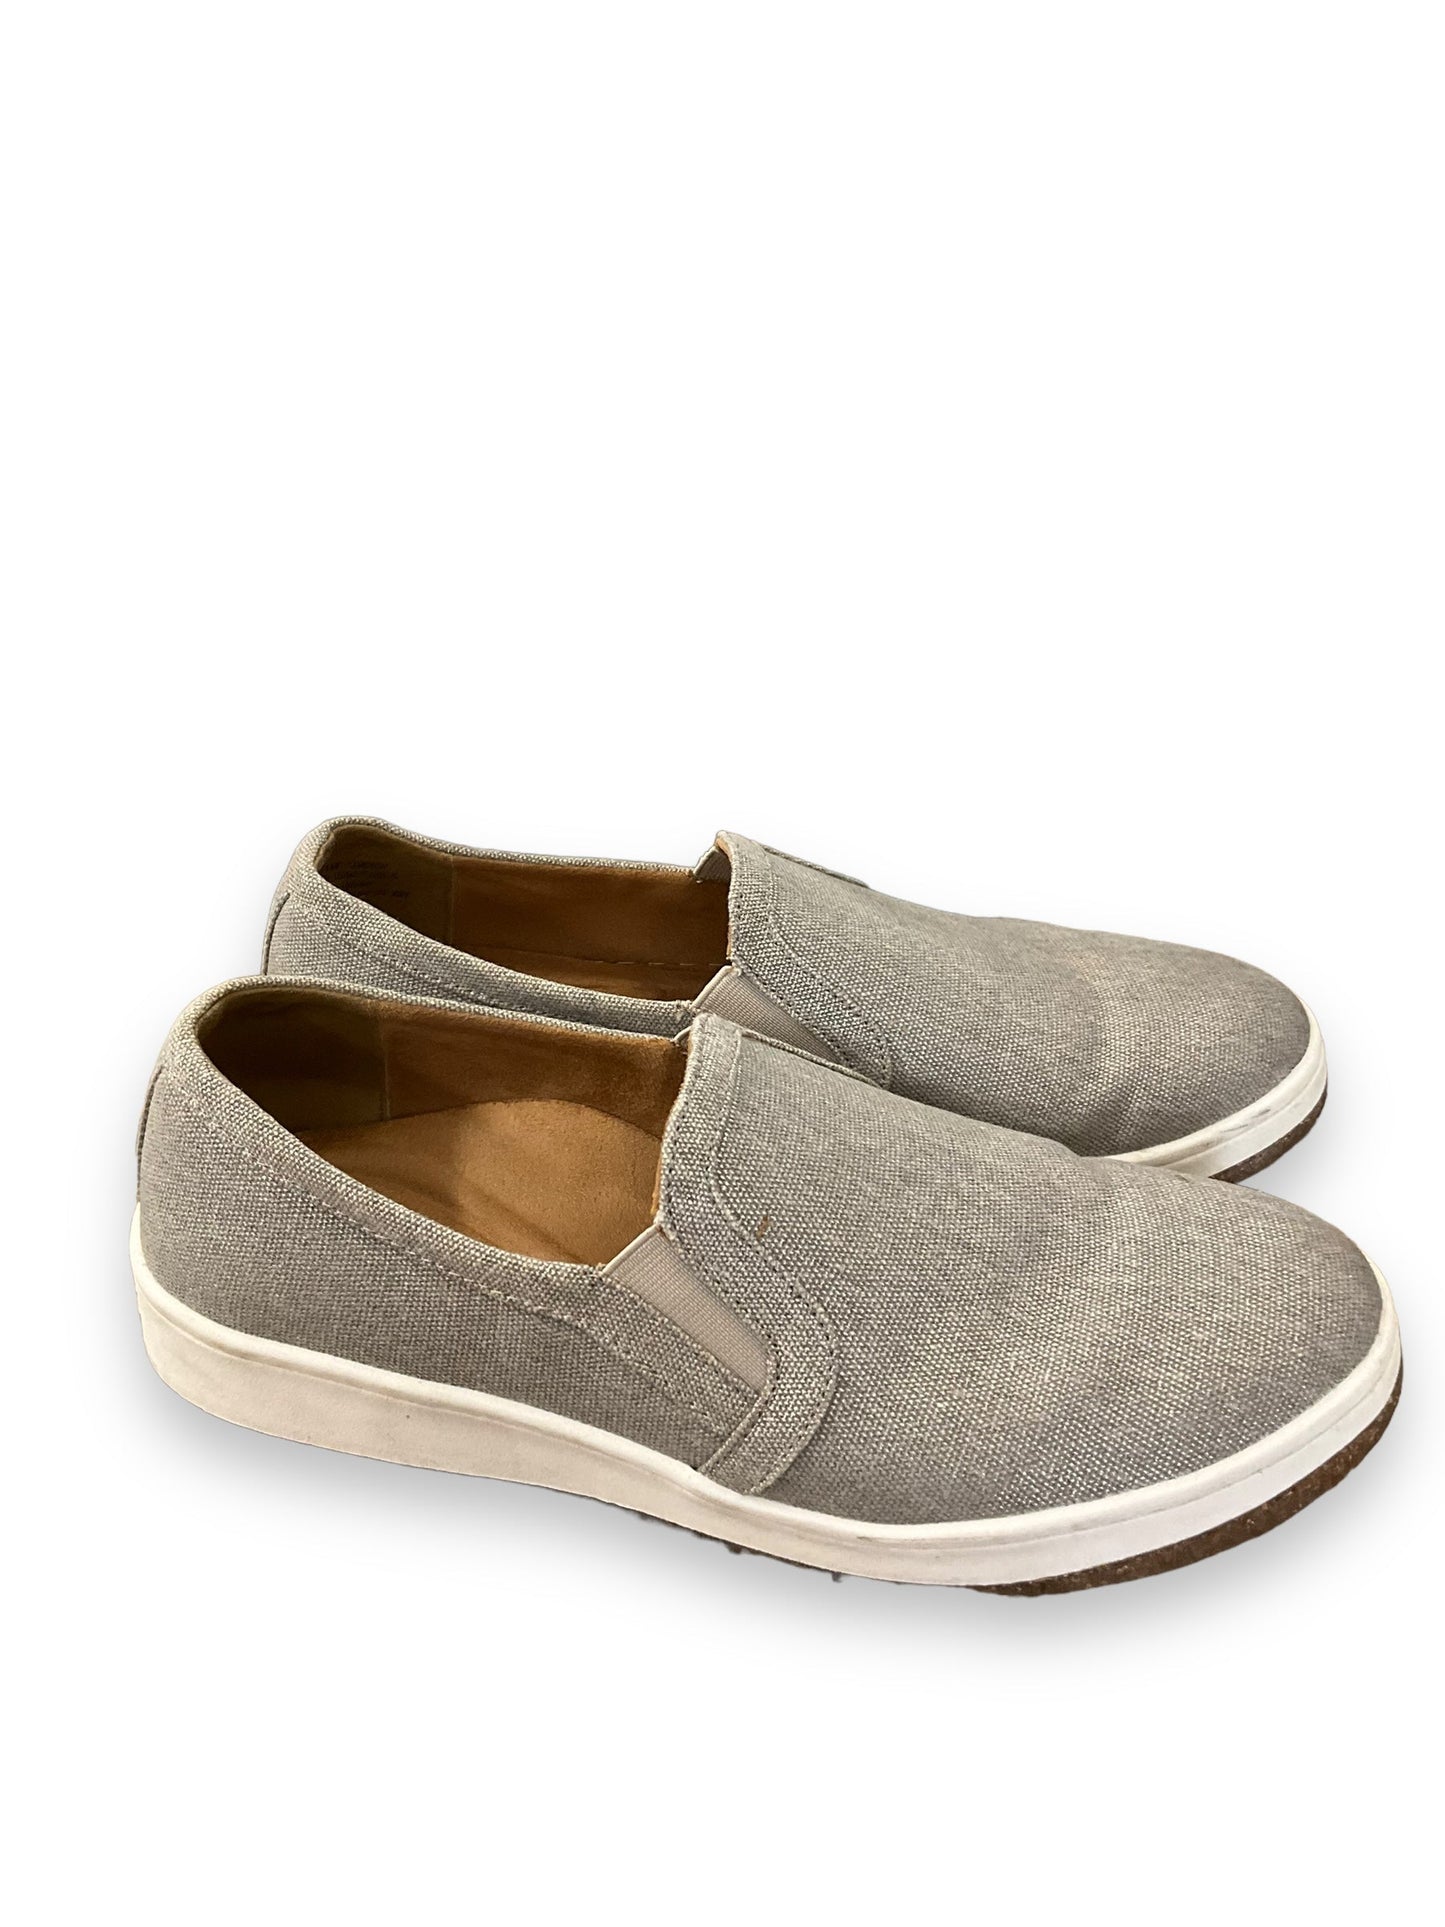 Grey Shoes Flats Aetrex, Size 8.5